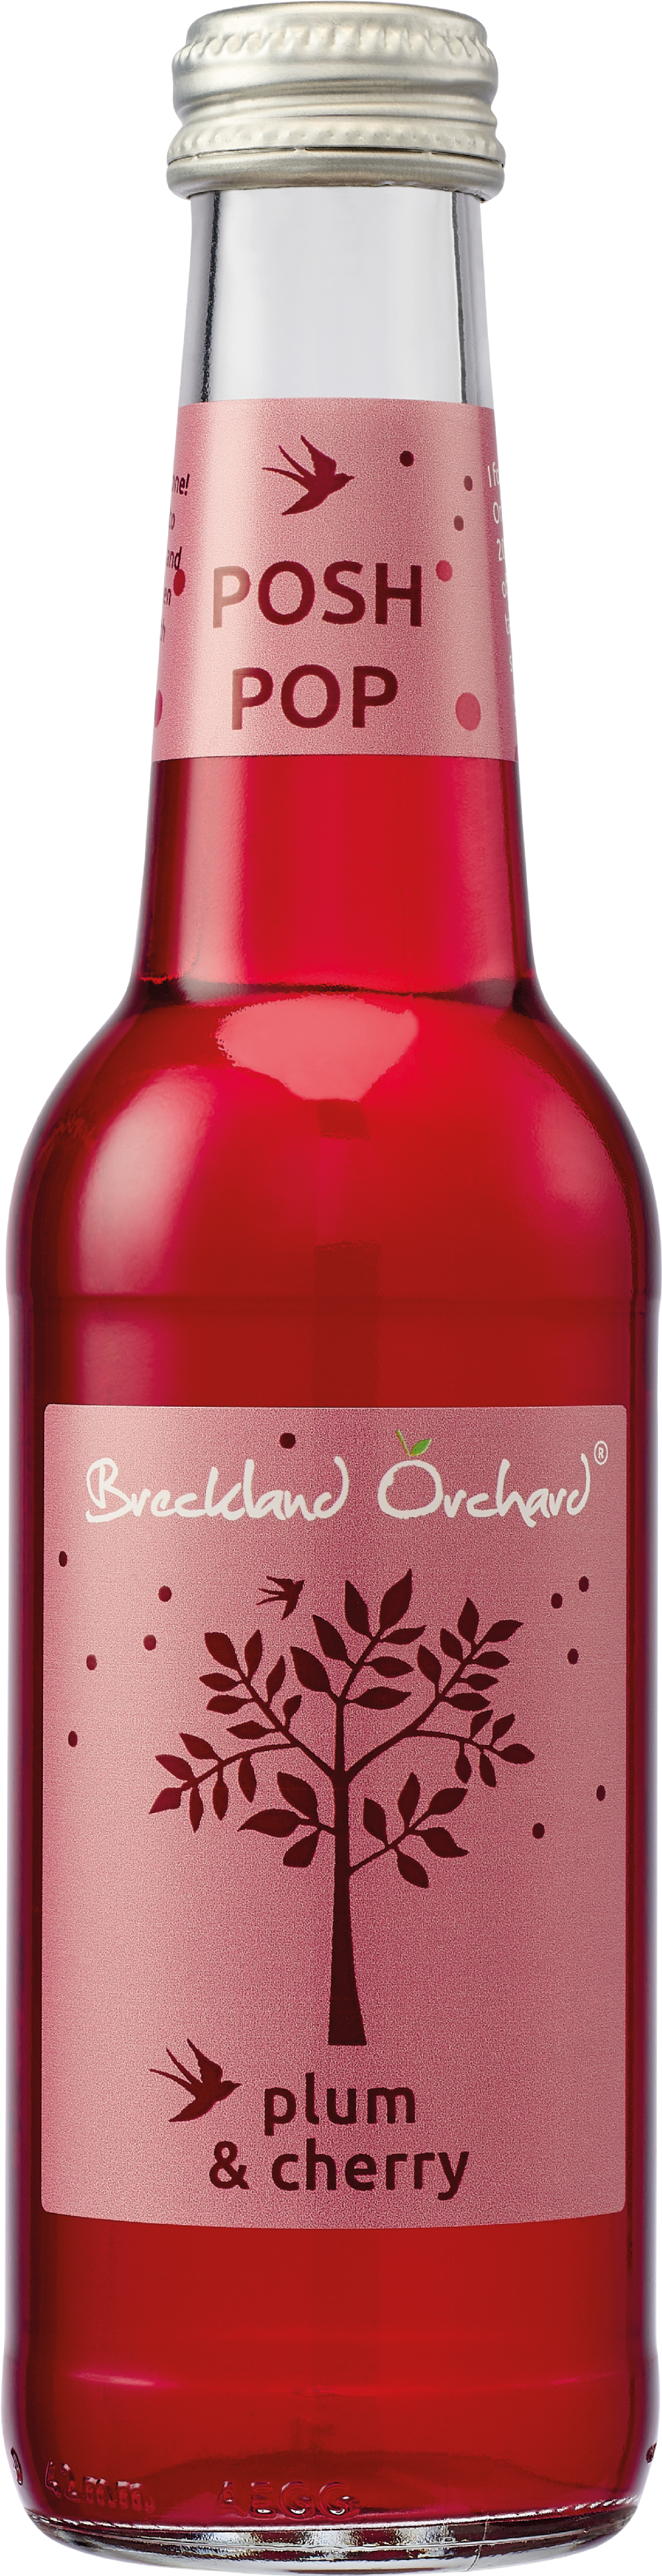 BRECKLAND ORCHARD Posh Pop - Plum & Cherry 275ml